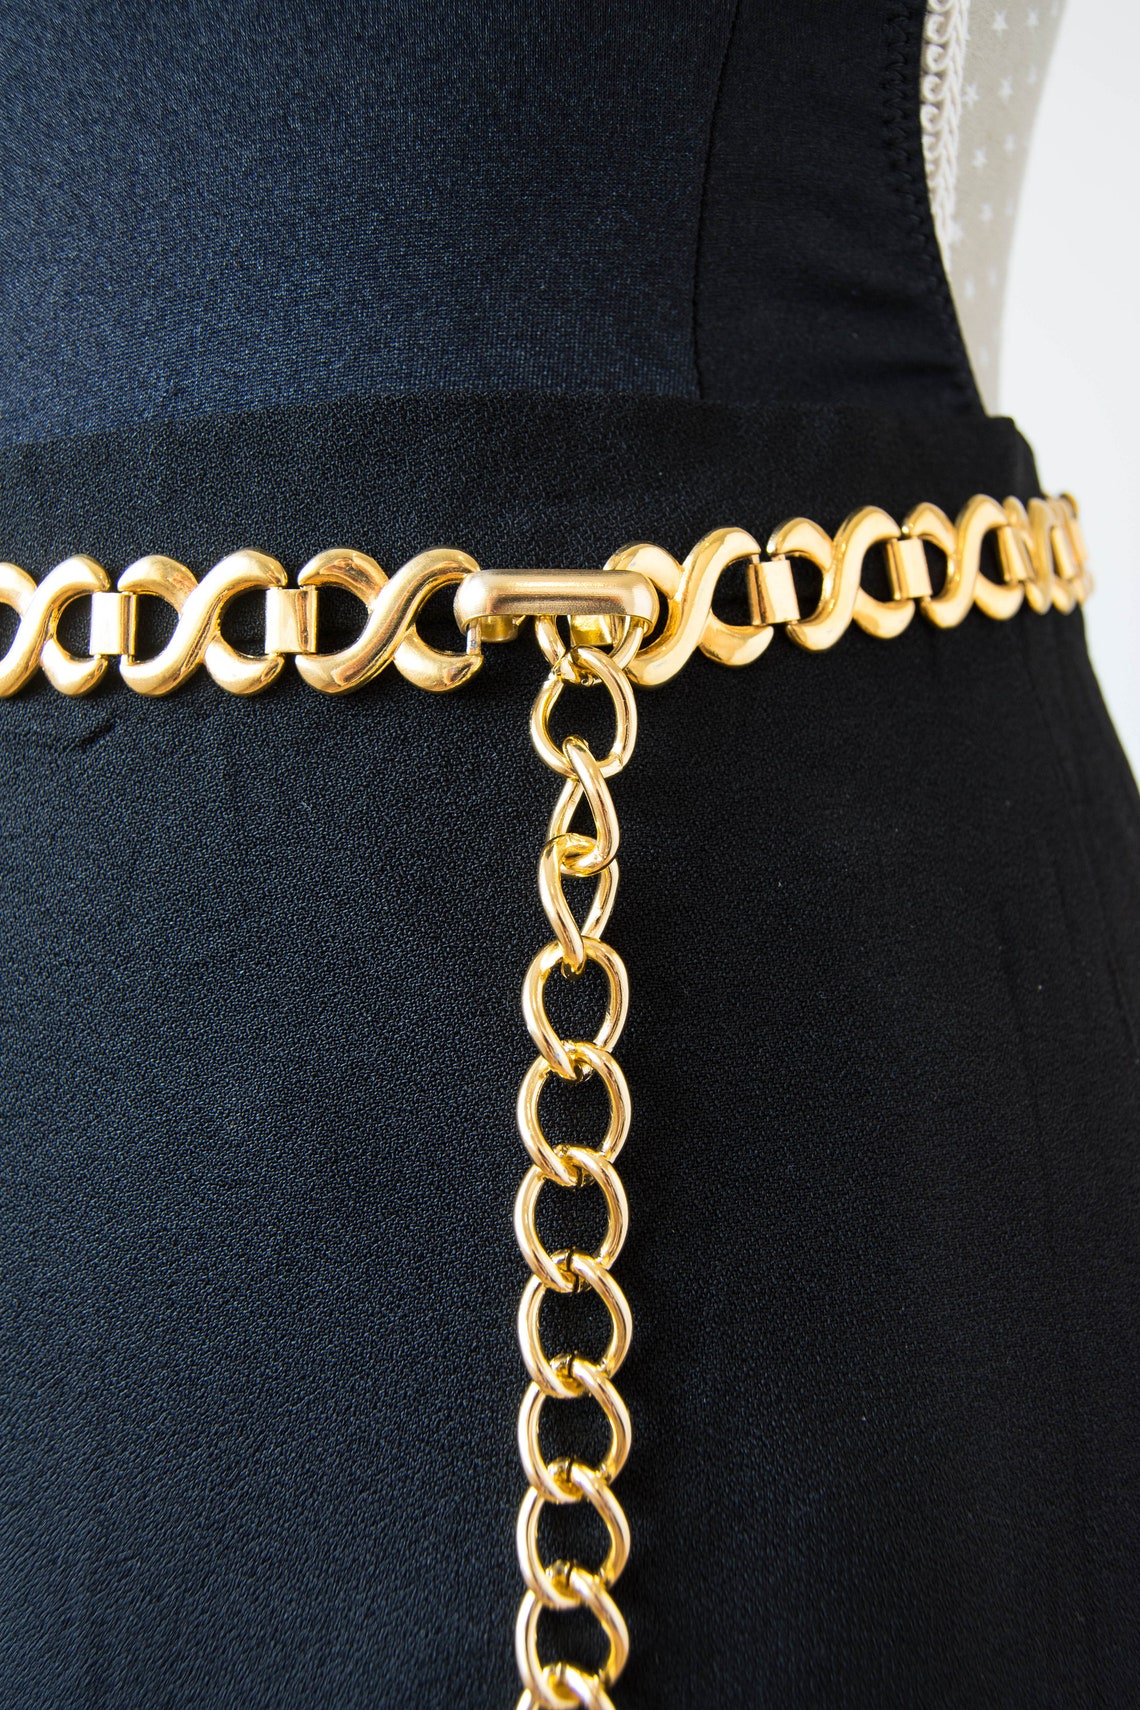 NOS 90s gold chain belt gold metal belt waist chain belt | Etsy